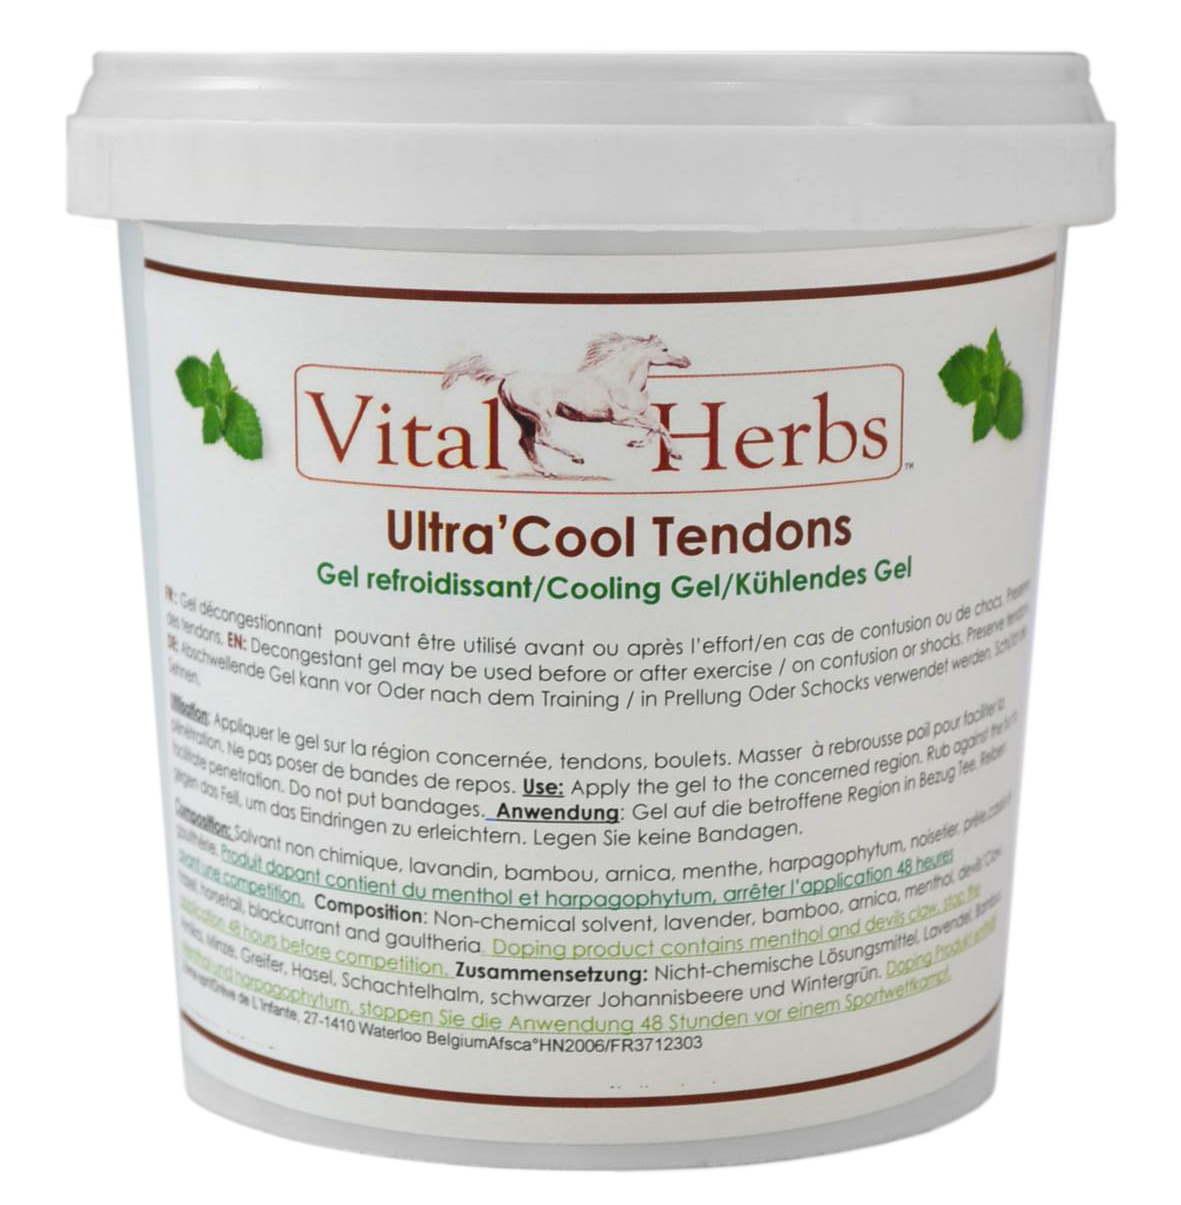 Ultra Cool Tendon Gel vital herb\'s